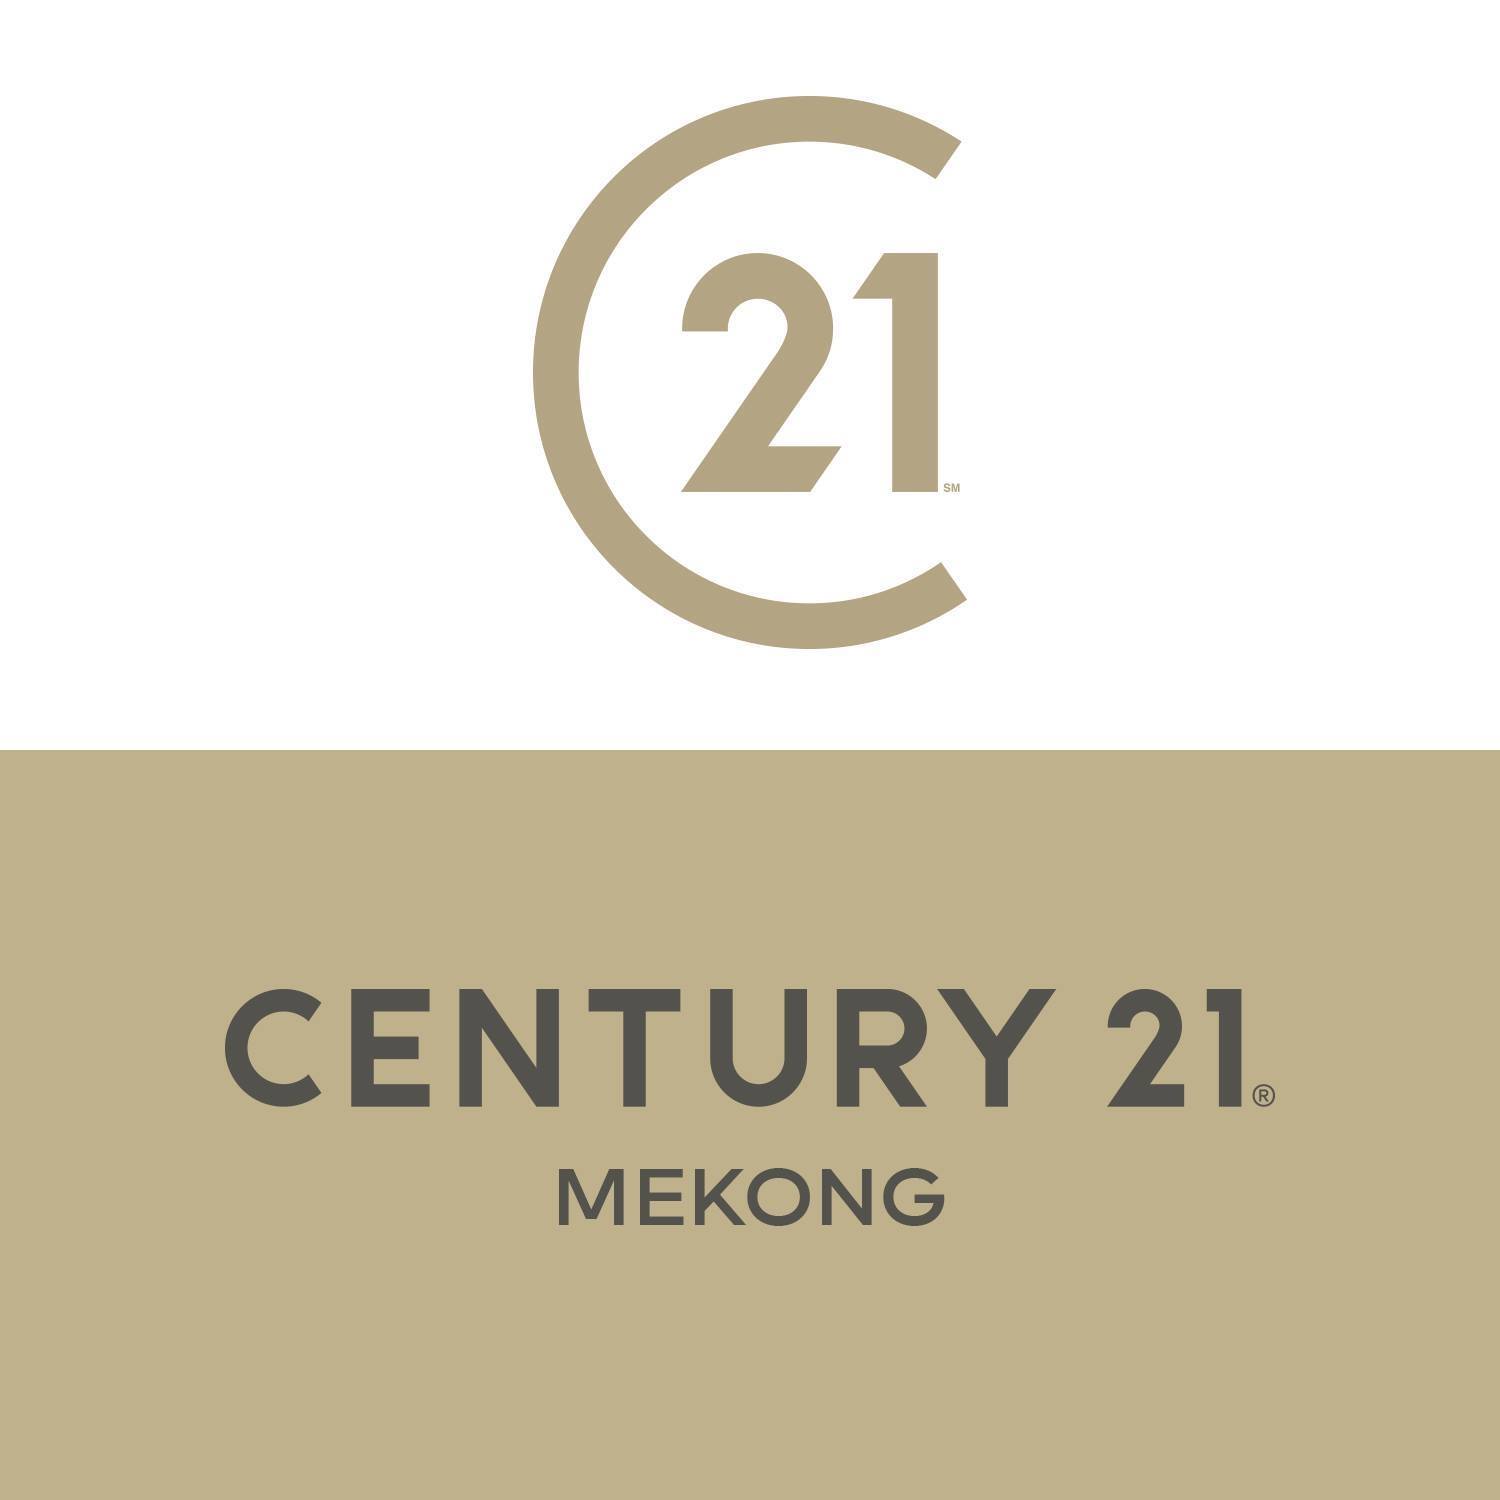 Century 21 Mekong Realty